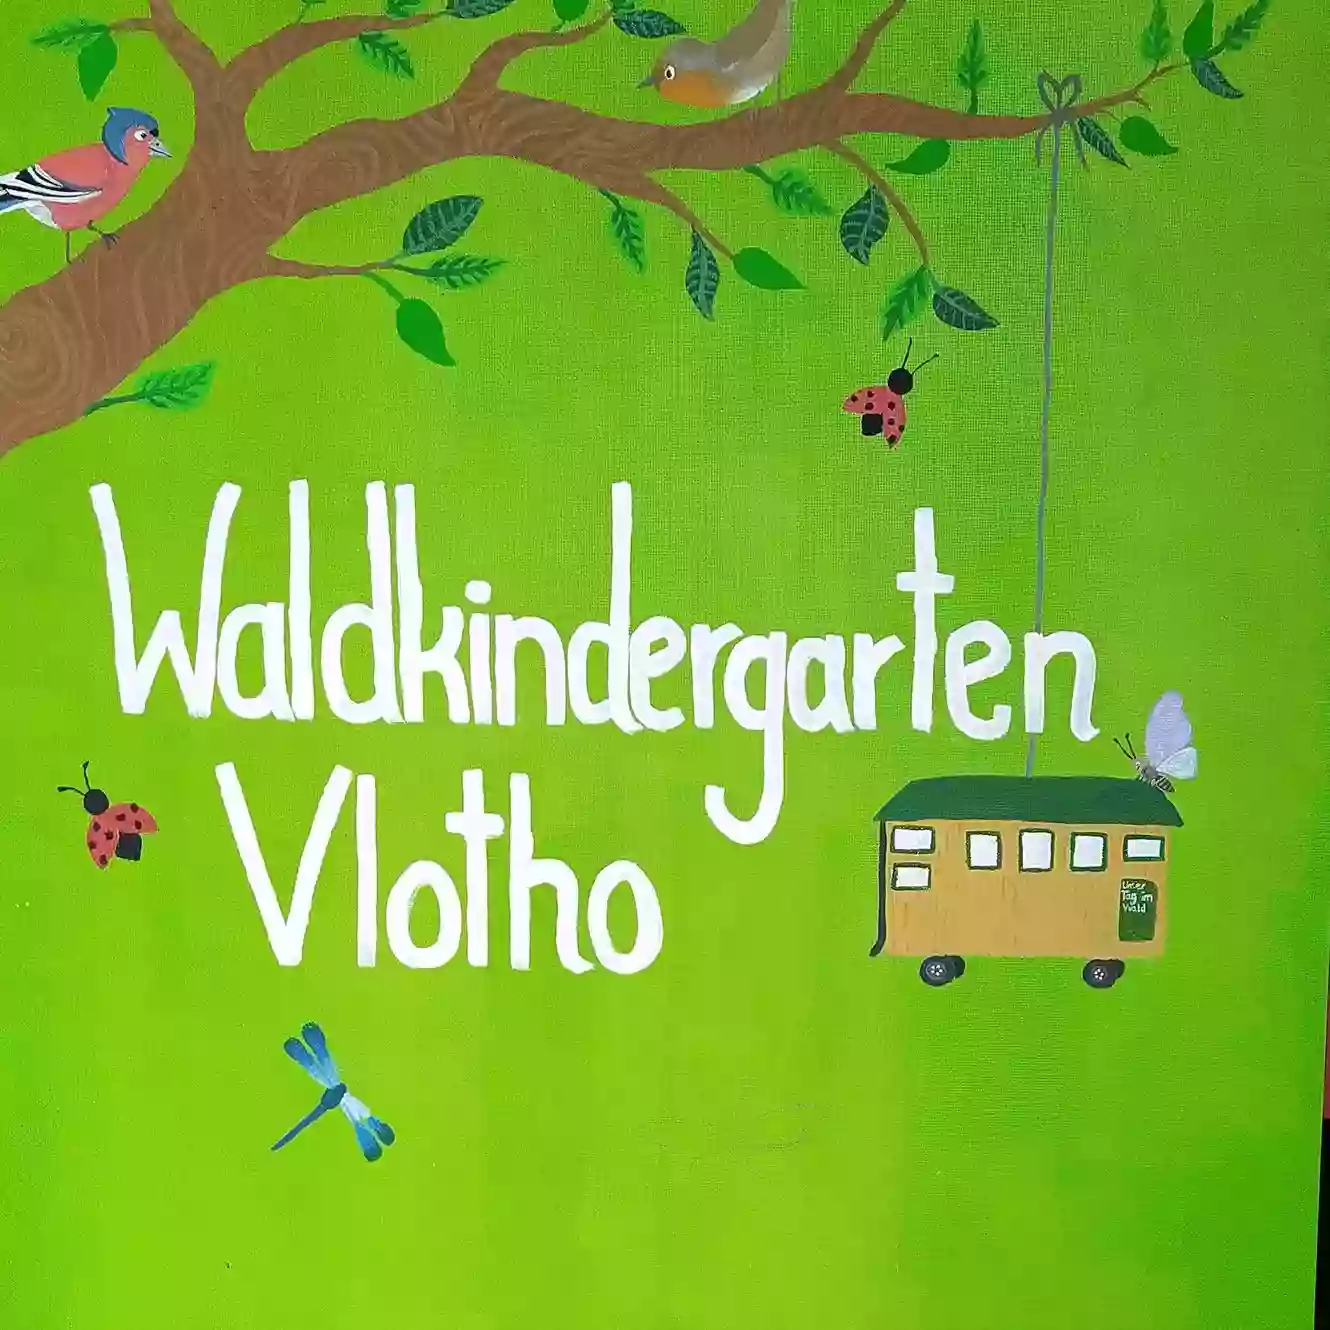 Waldkindergarten Vlotho "Die Käferbande" e.V.